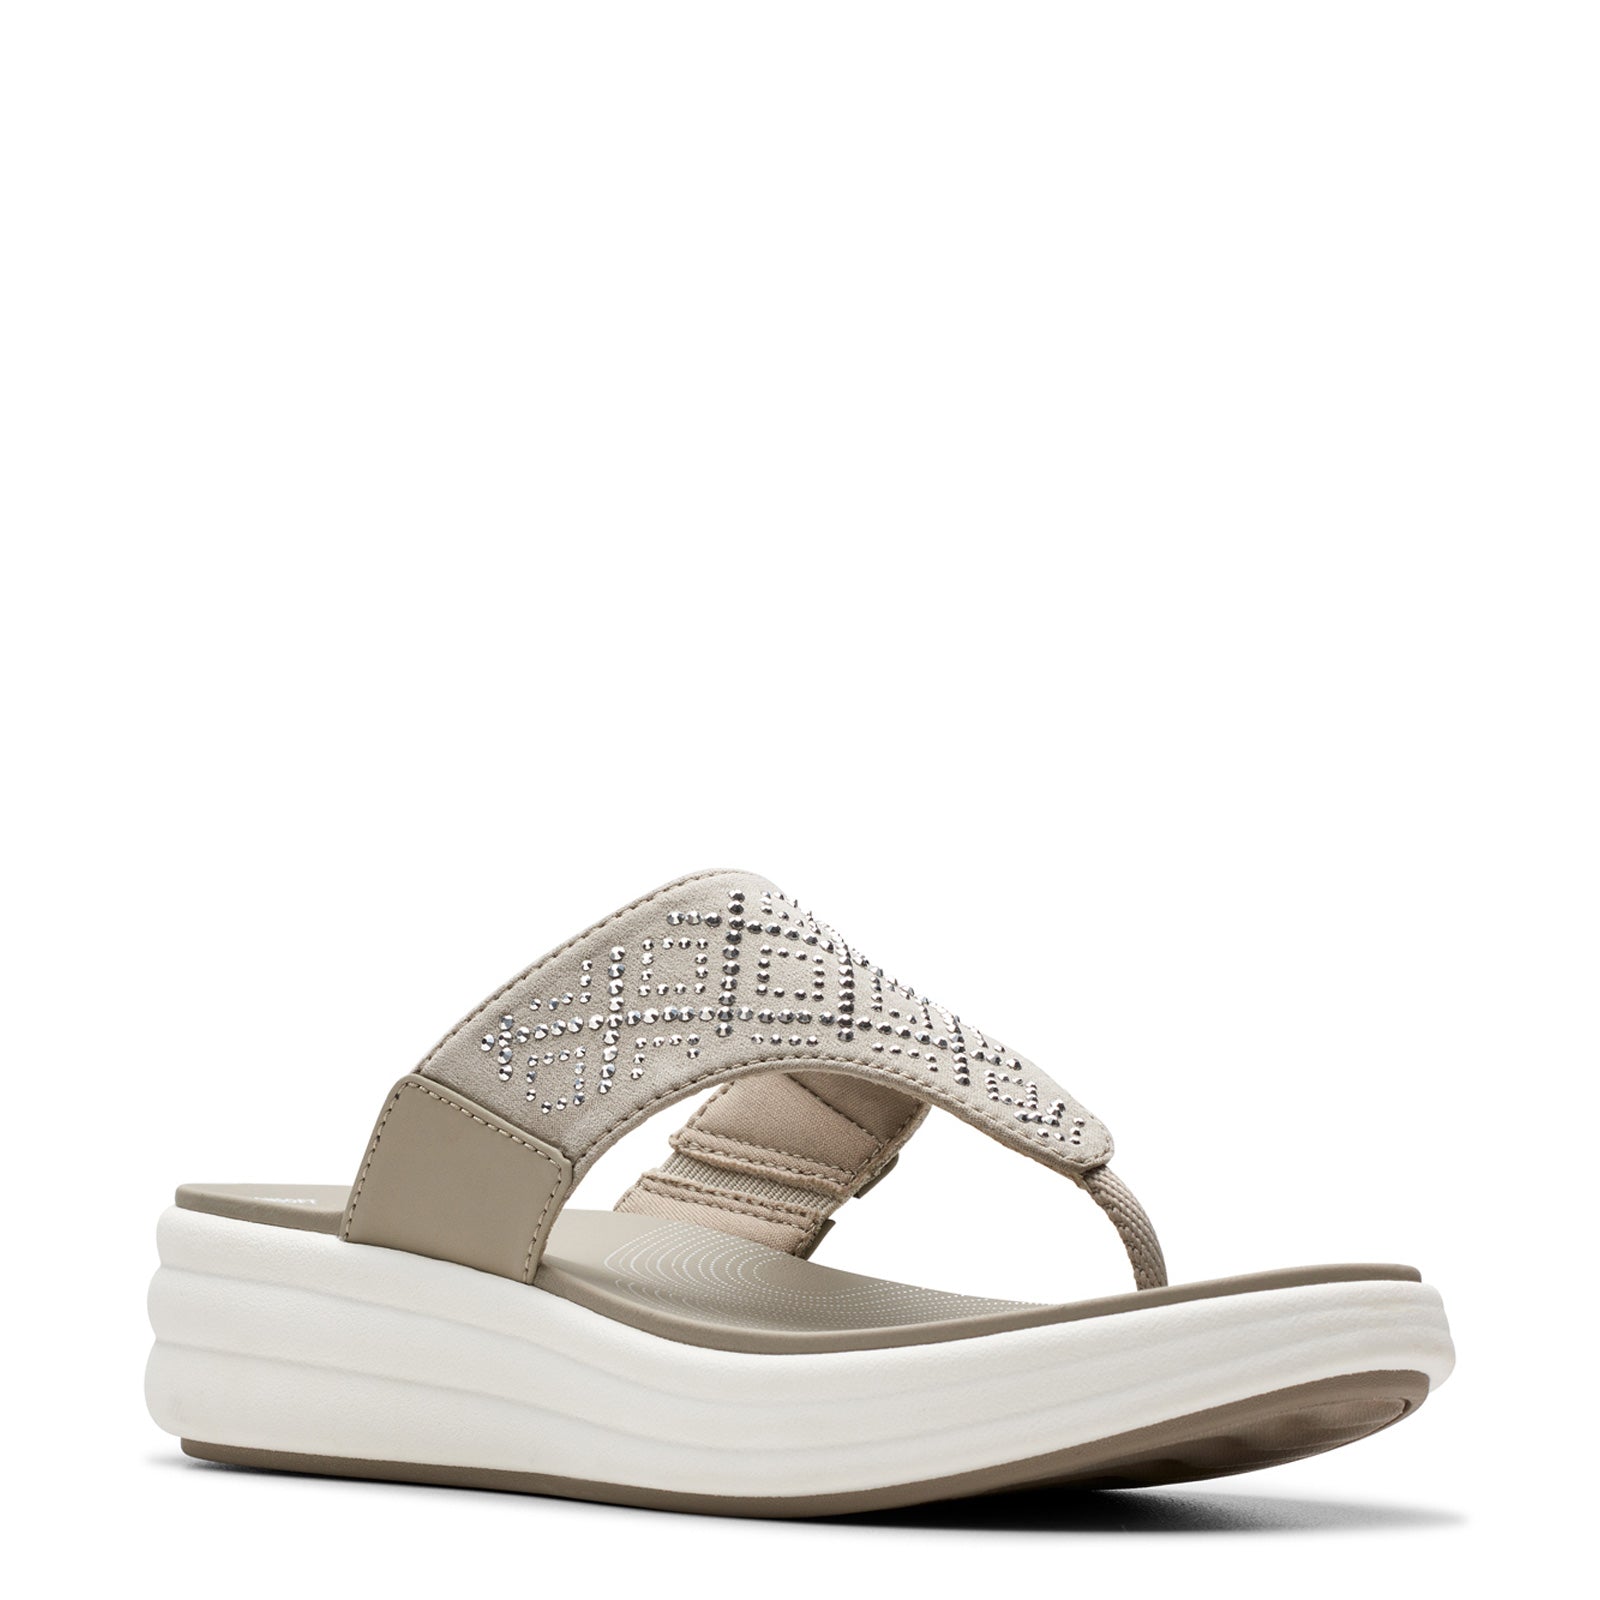 Clarks Artisan Collection Tan Mary Jane Strap Slip on Sandals Size 8.5M |  Slip on sandal, Sandals, Clarks